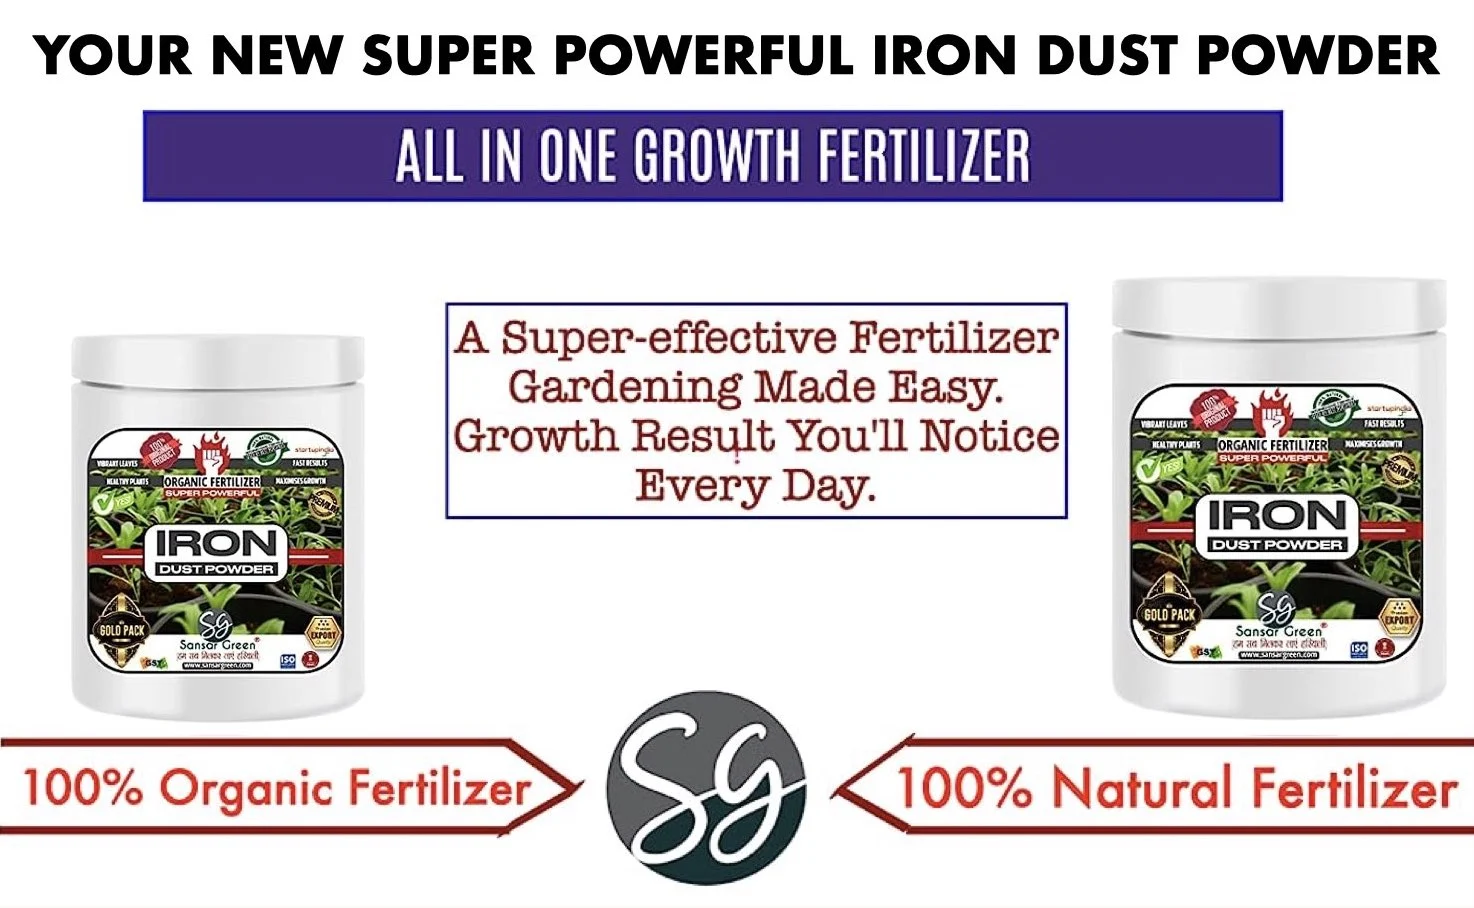 Sansar Green Iron Dust Powder For Plants